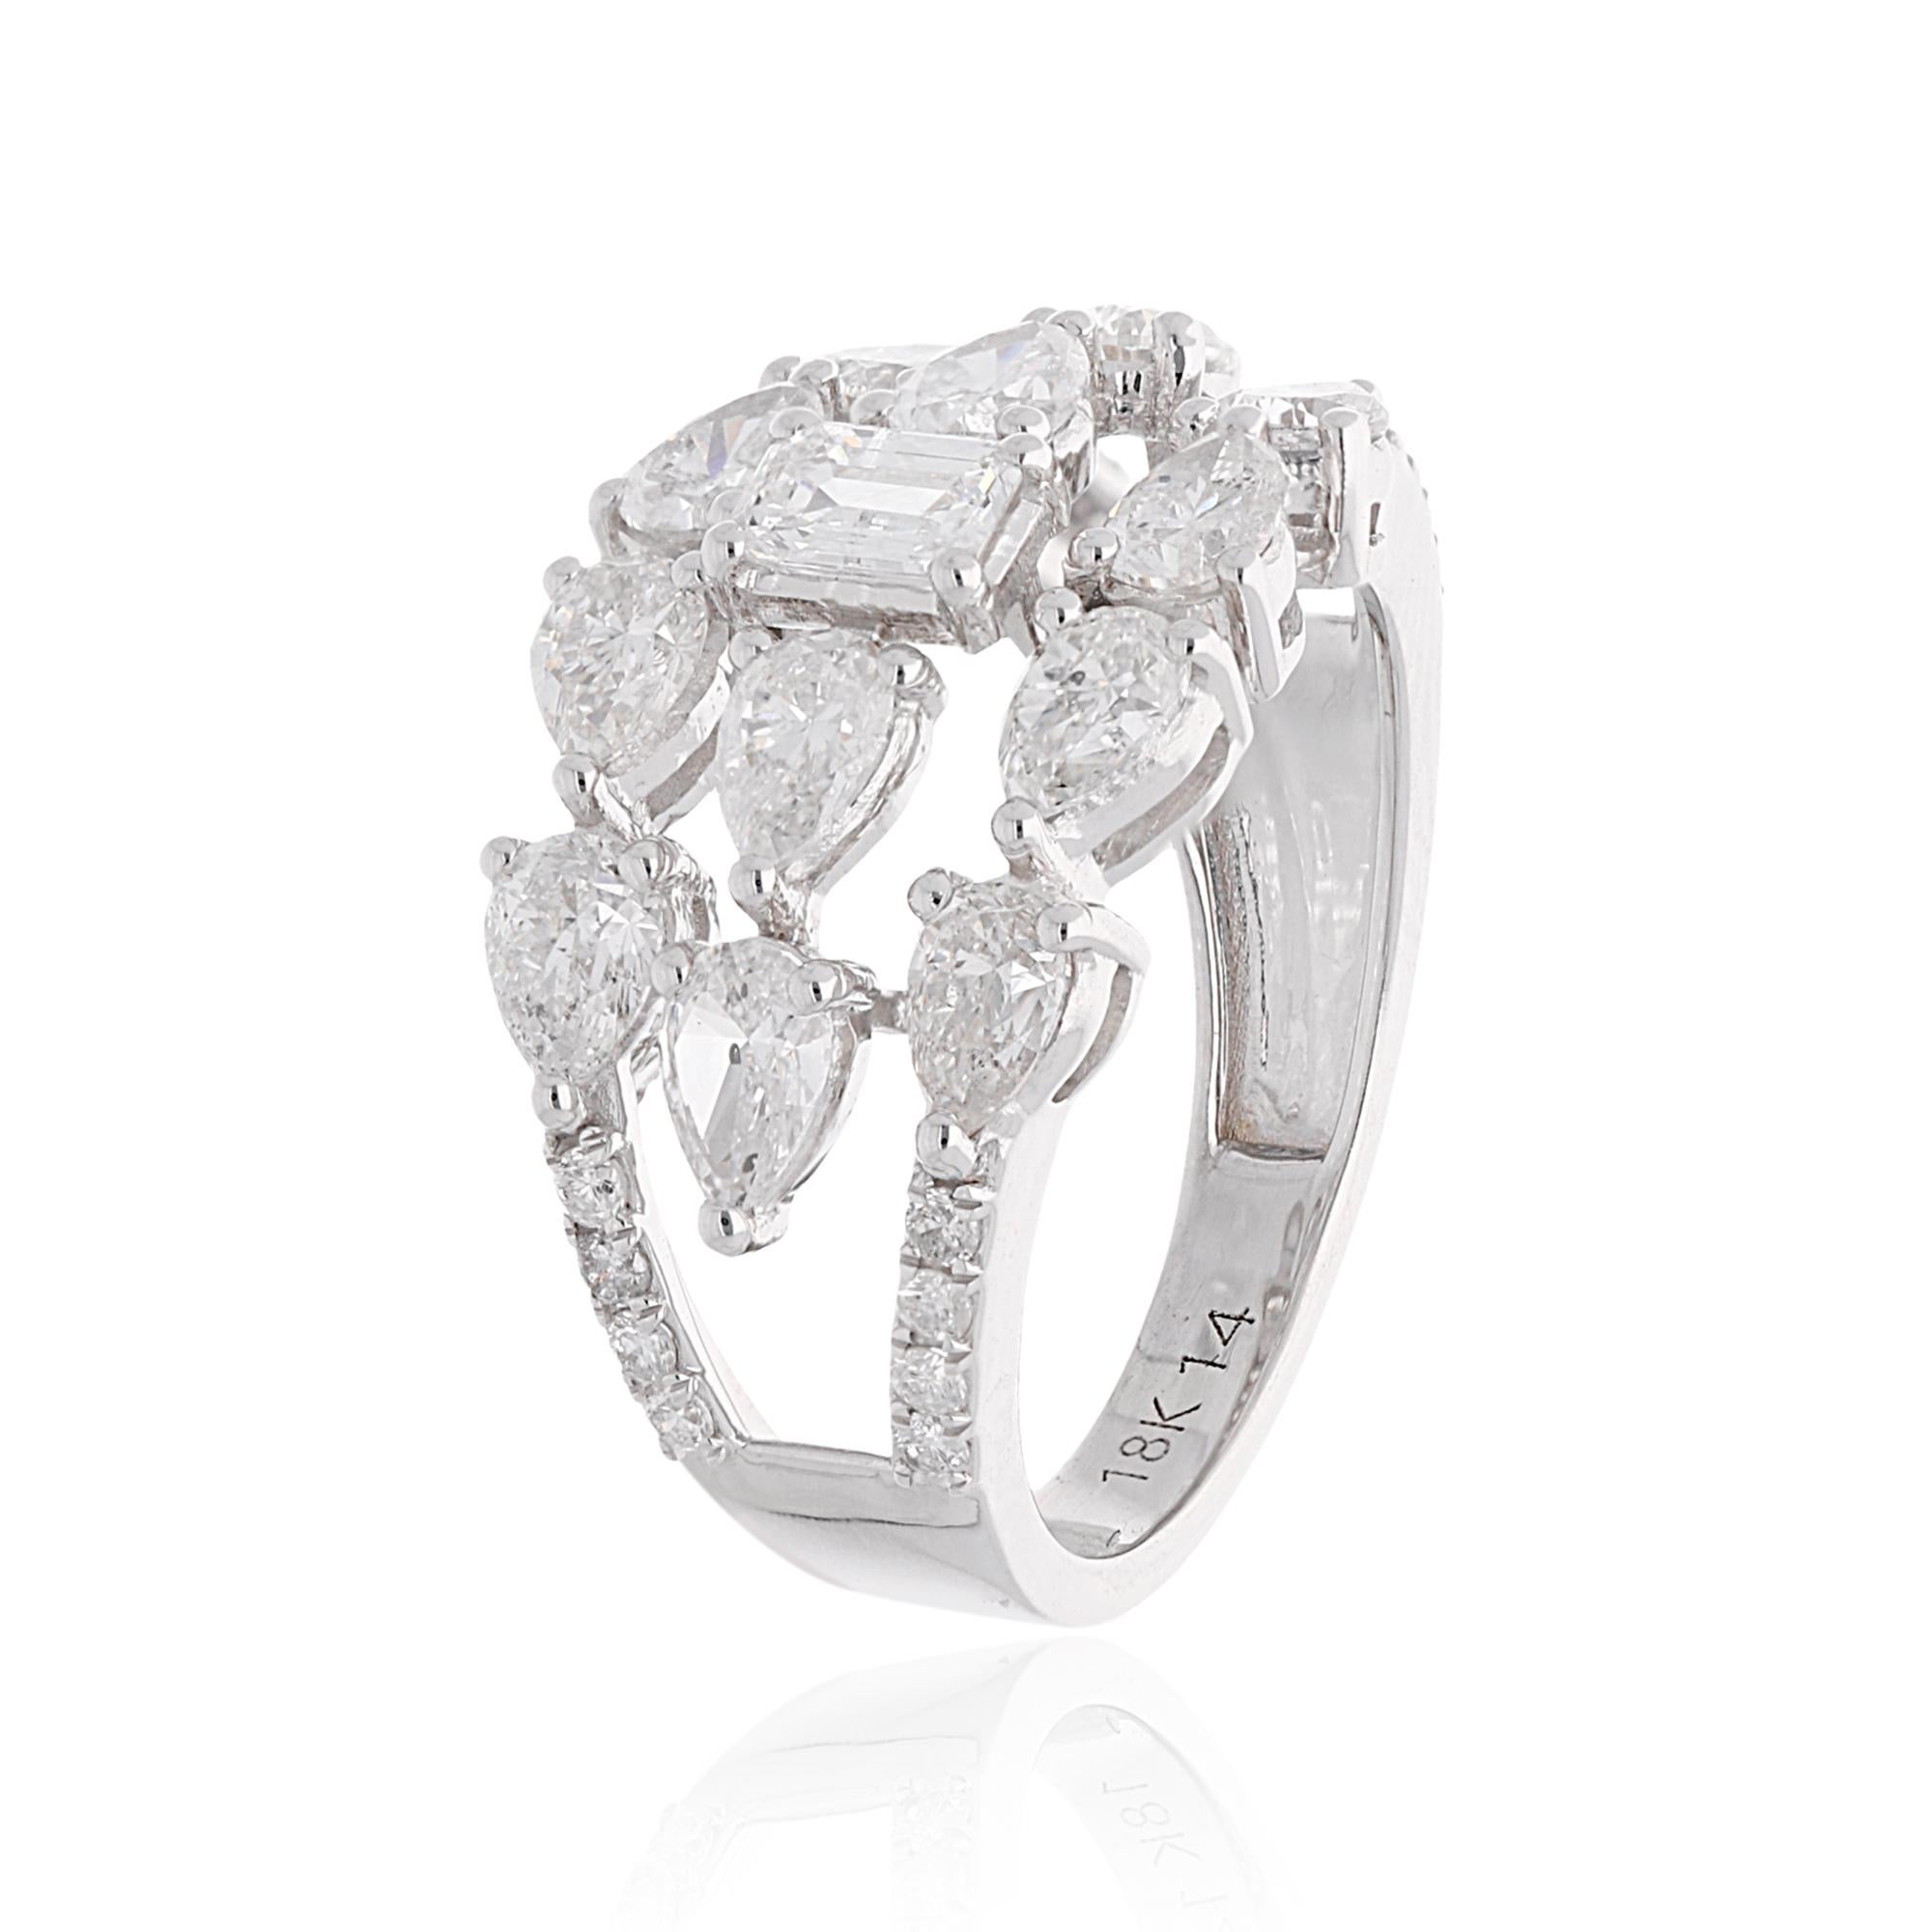 For Sale:  2.75 Carat SI Clarity HI Color Pear Emerald Cut Diamond Ring 18 Karat White Gold 2